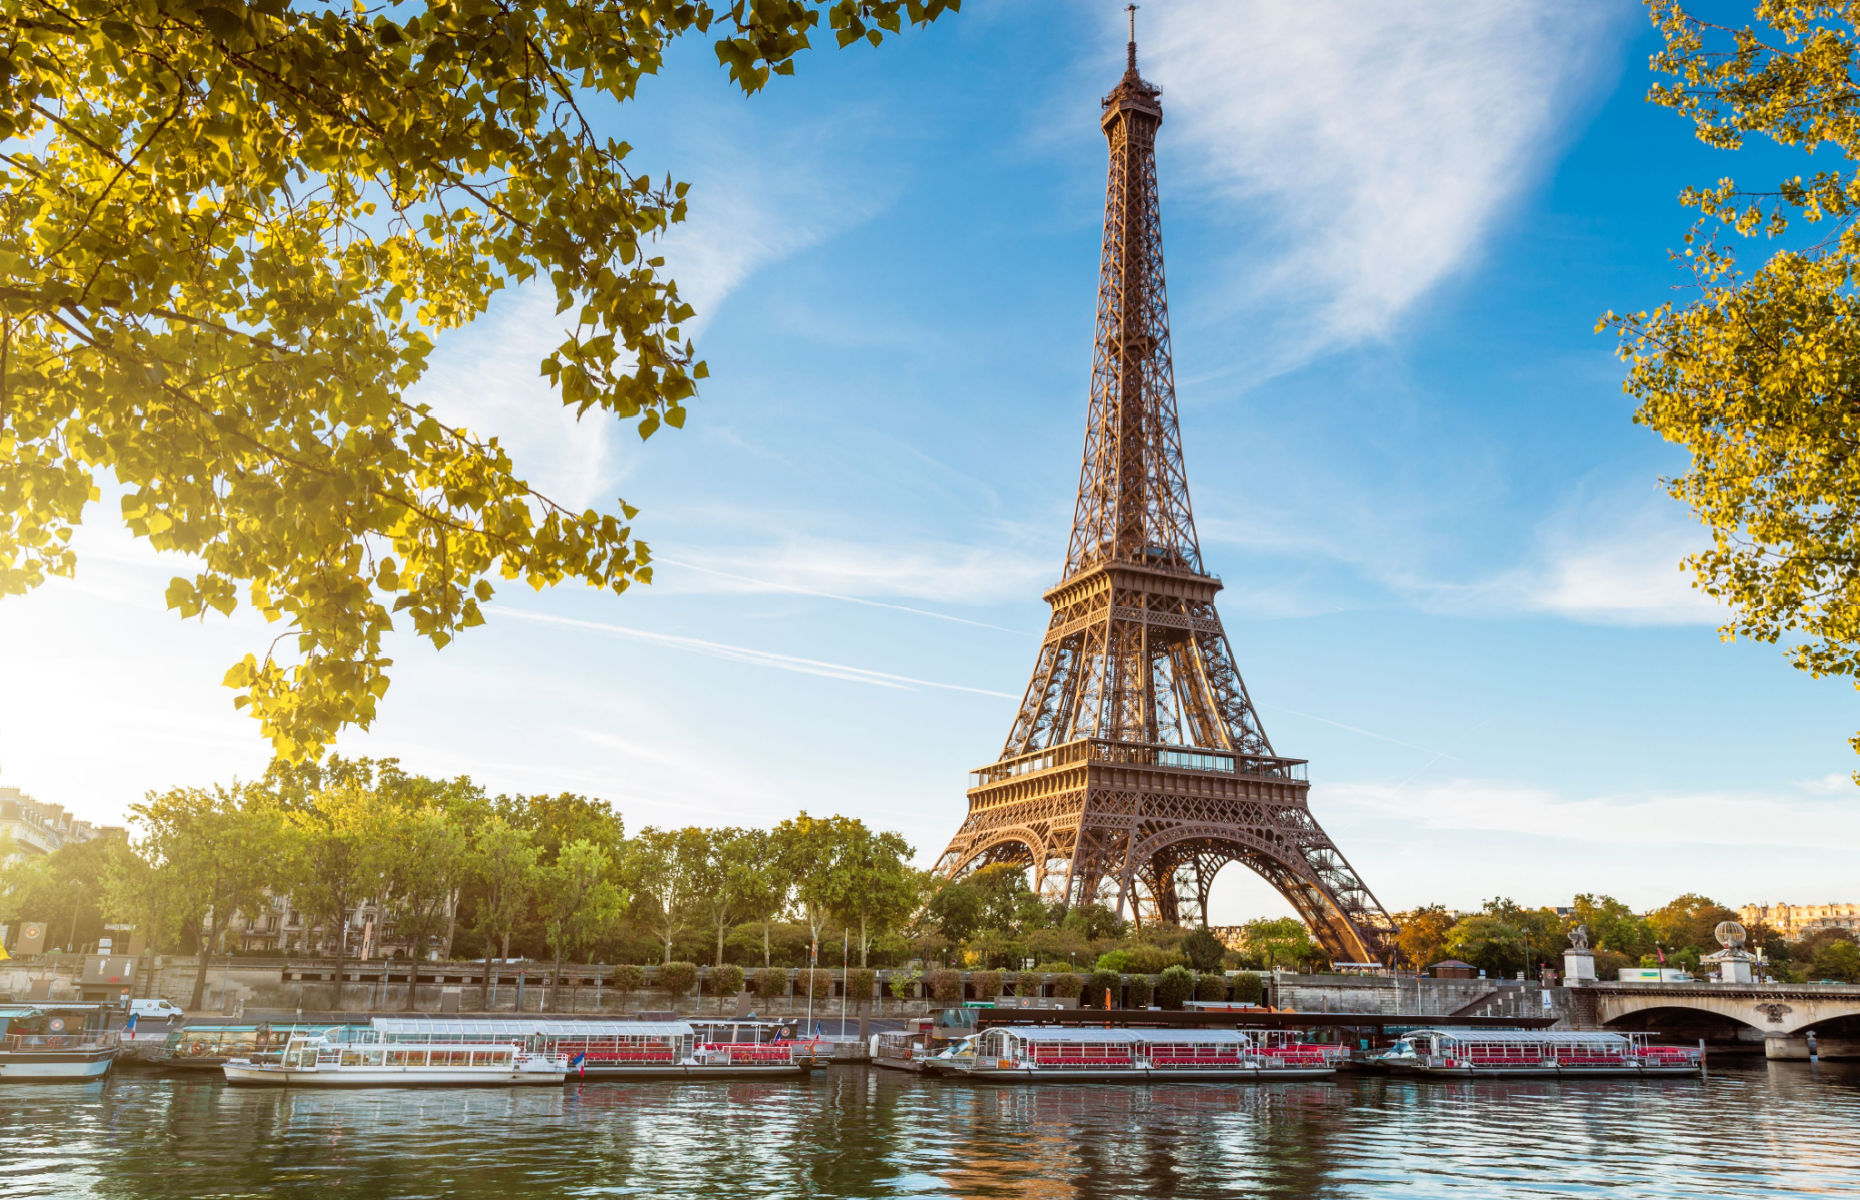 Paris is a short distance away (Image: beboy/Shutterstock)